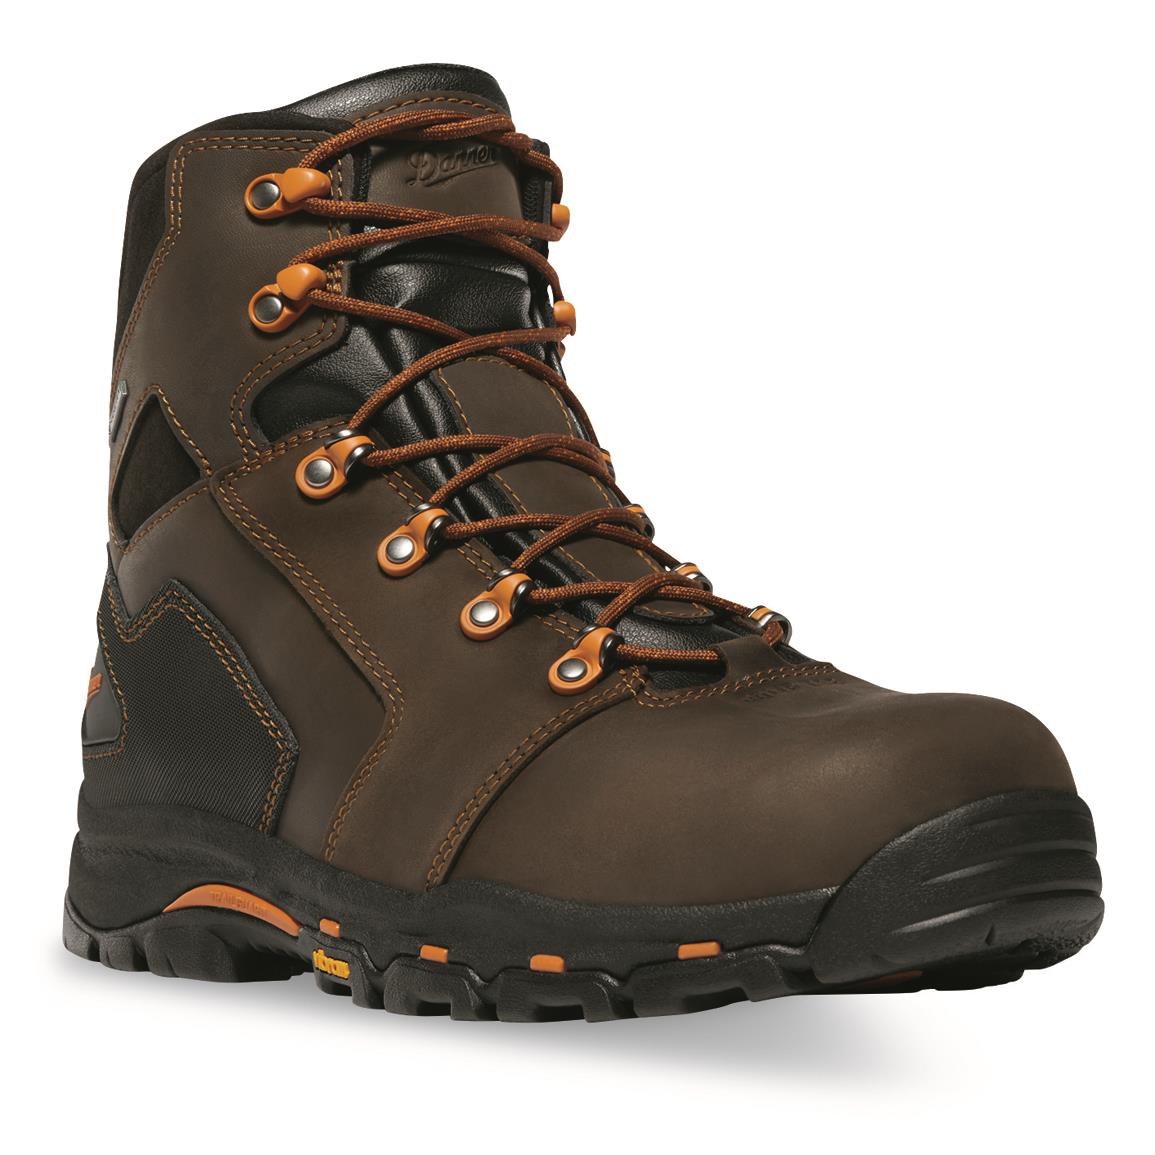 Danner Men's Vicious 6" NMT GORE-TEX Safety Toe Work Boots, Brown/orange